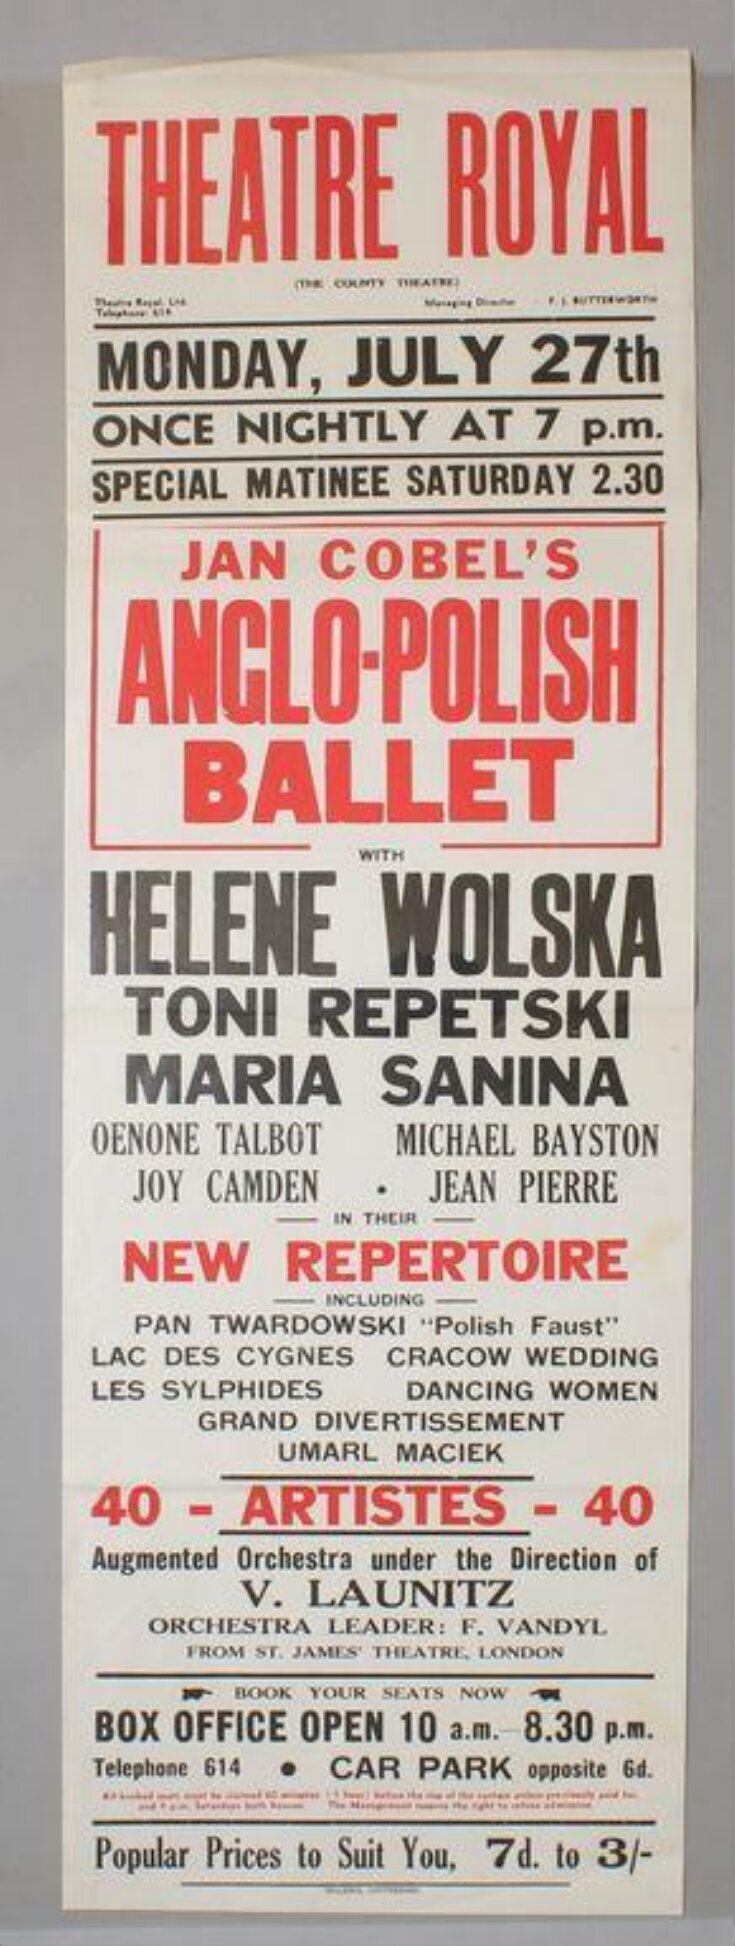 Jan Cobel’s Anglo-Polish Ballet image